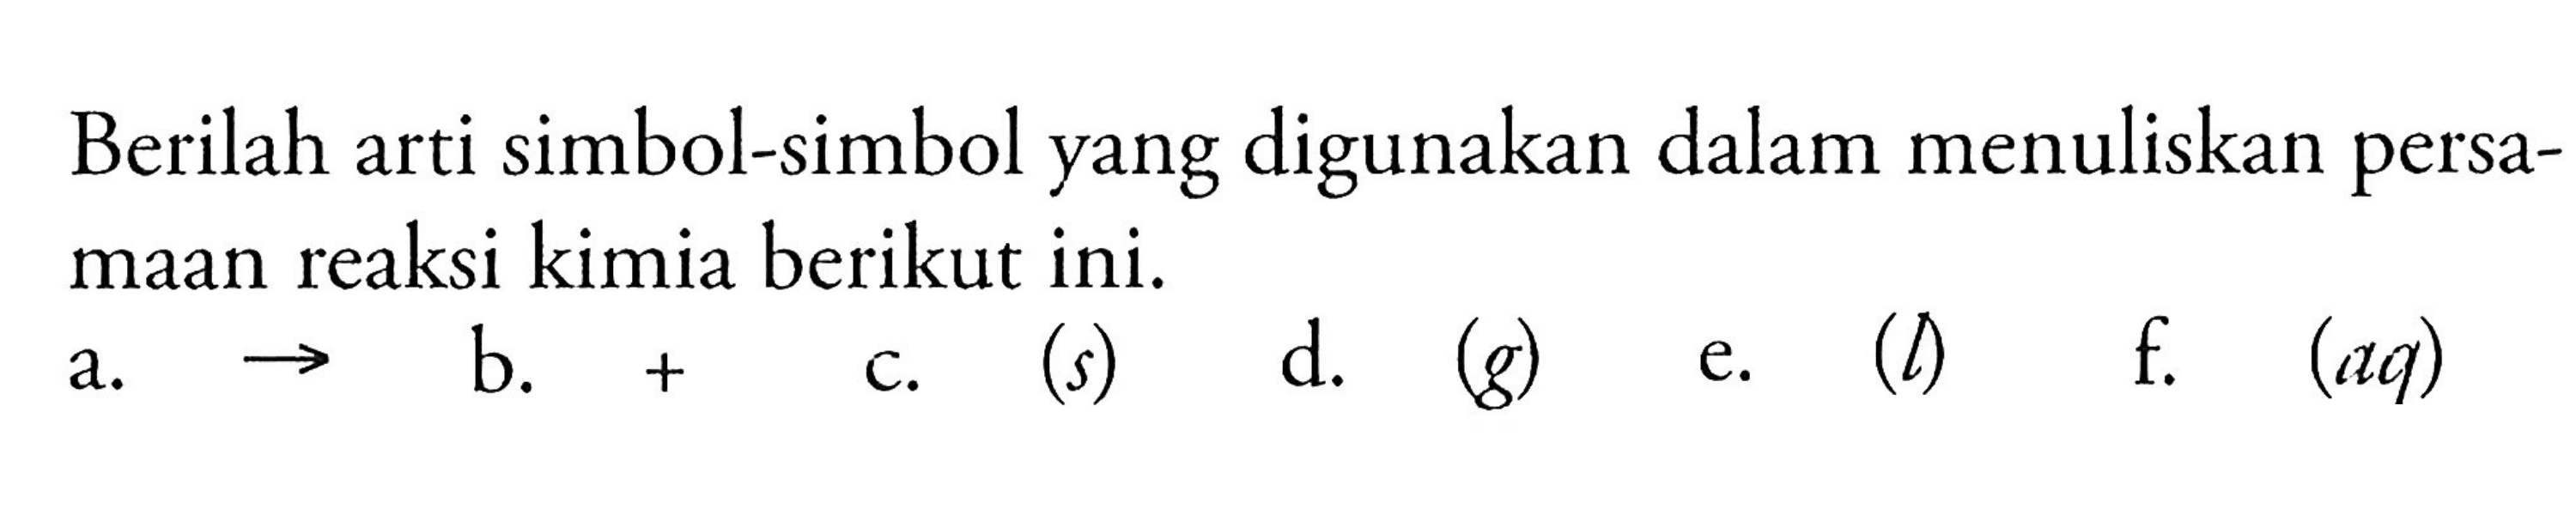 Berilah arti simbol-simbol yang digunakan dalam menuliskan persamaan reaksi kimia berikut ini.
a.  ->  
b.  + 
c.  (s) 
 d . (g) 
e.  (l)  
f.  (aq) 